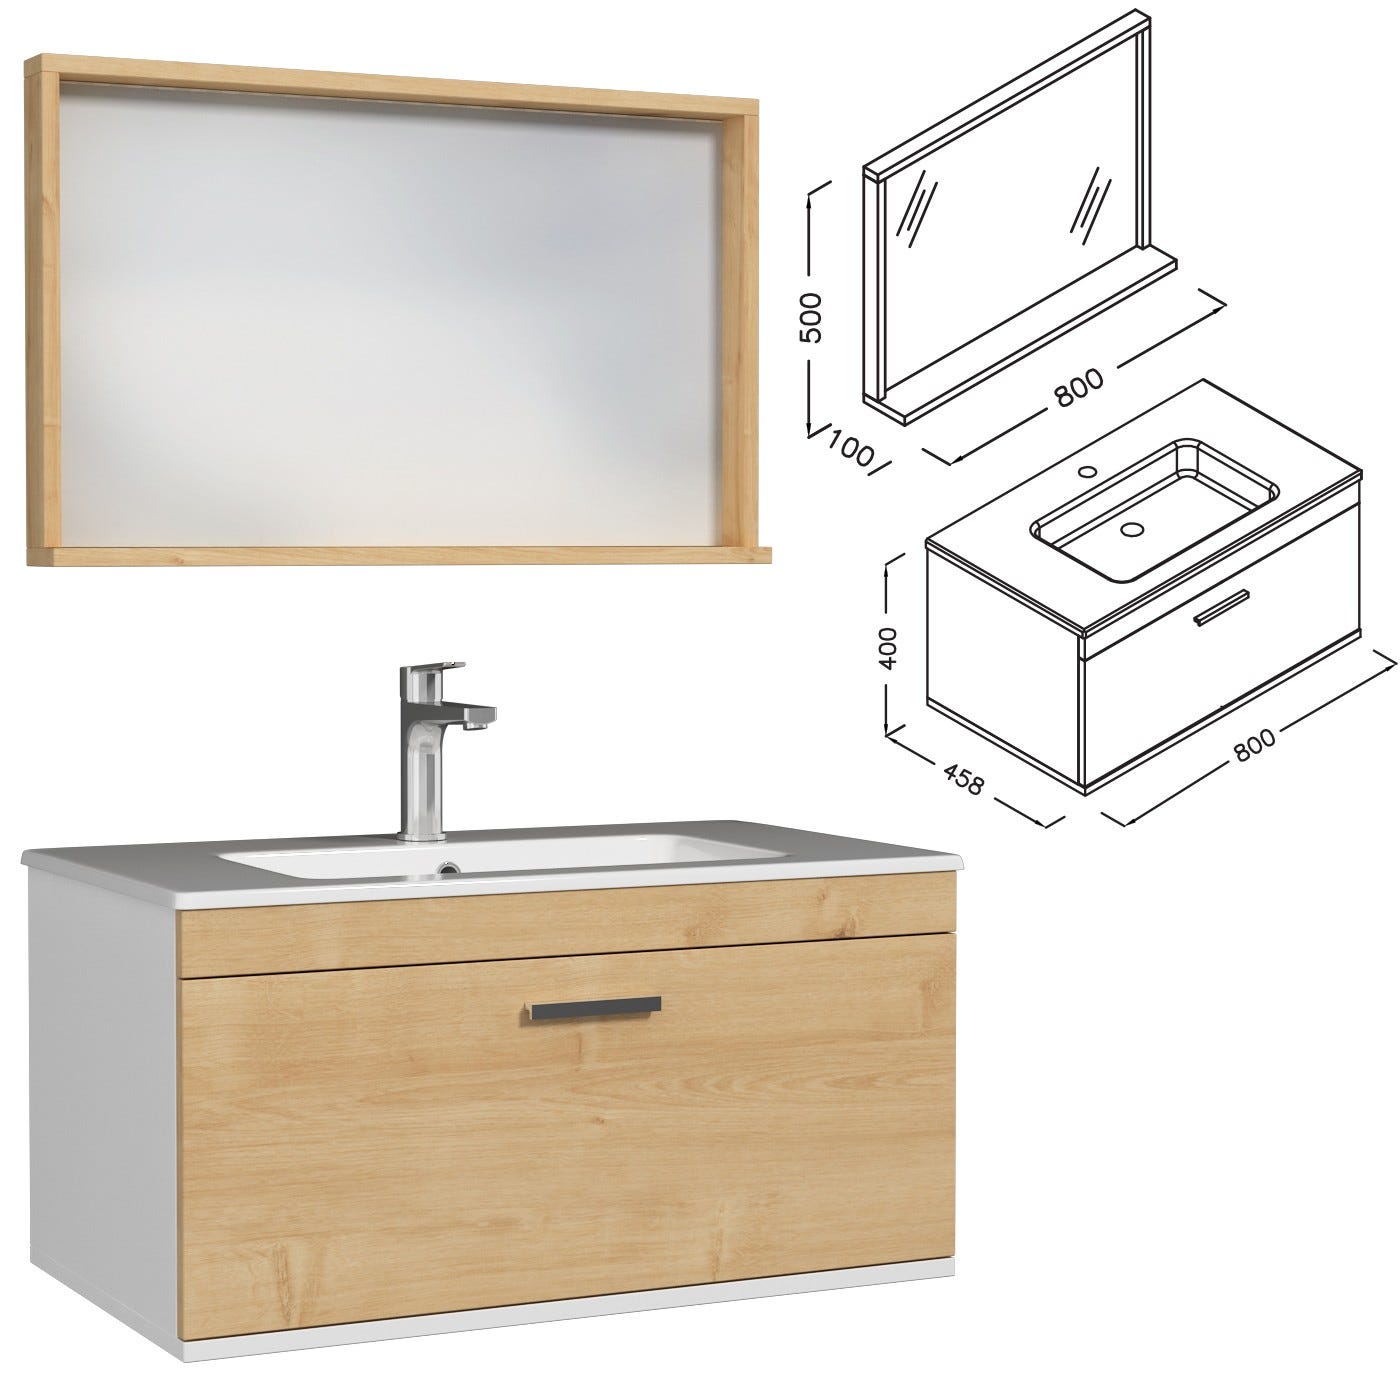 RUBITE Meuble salle de bain simple vasque 1 tiroir chêne clair largeur 80 cm + miroir cadre 3